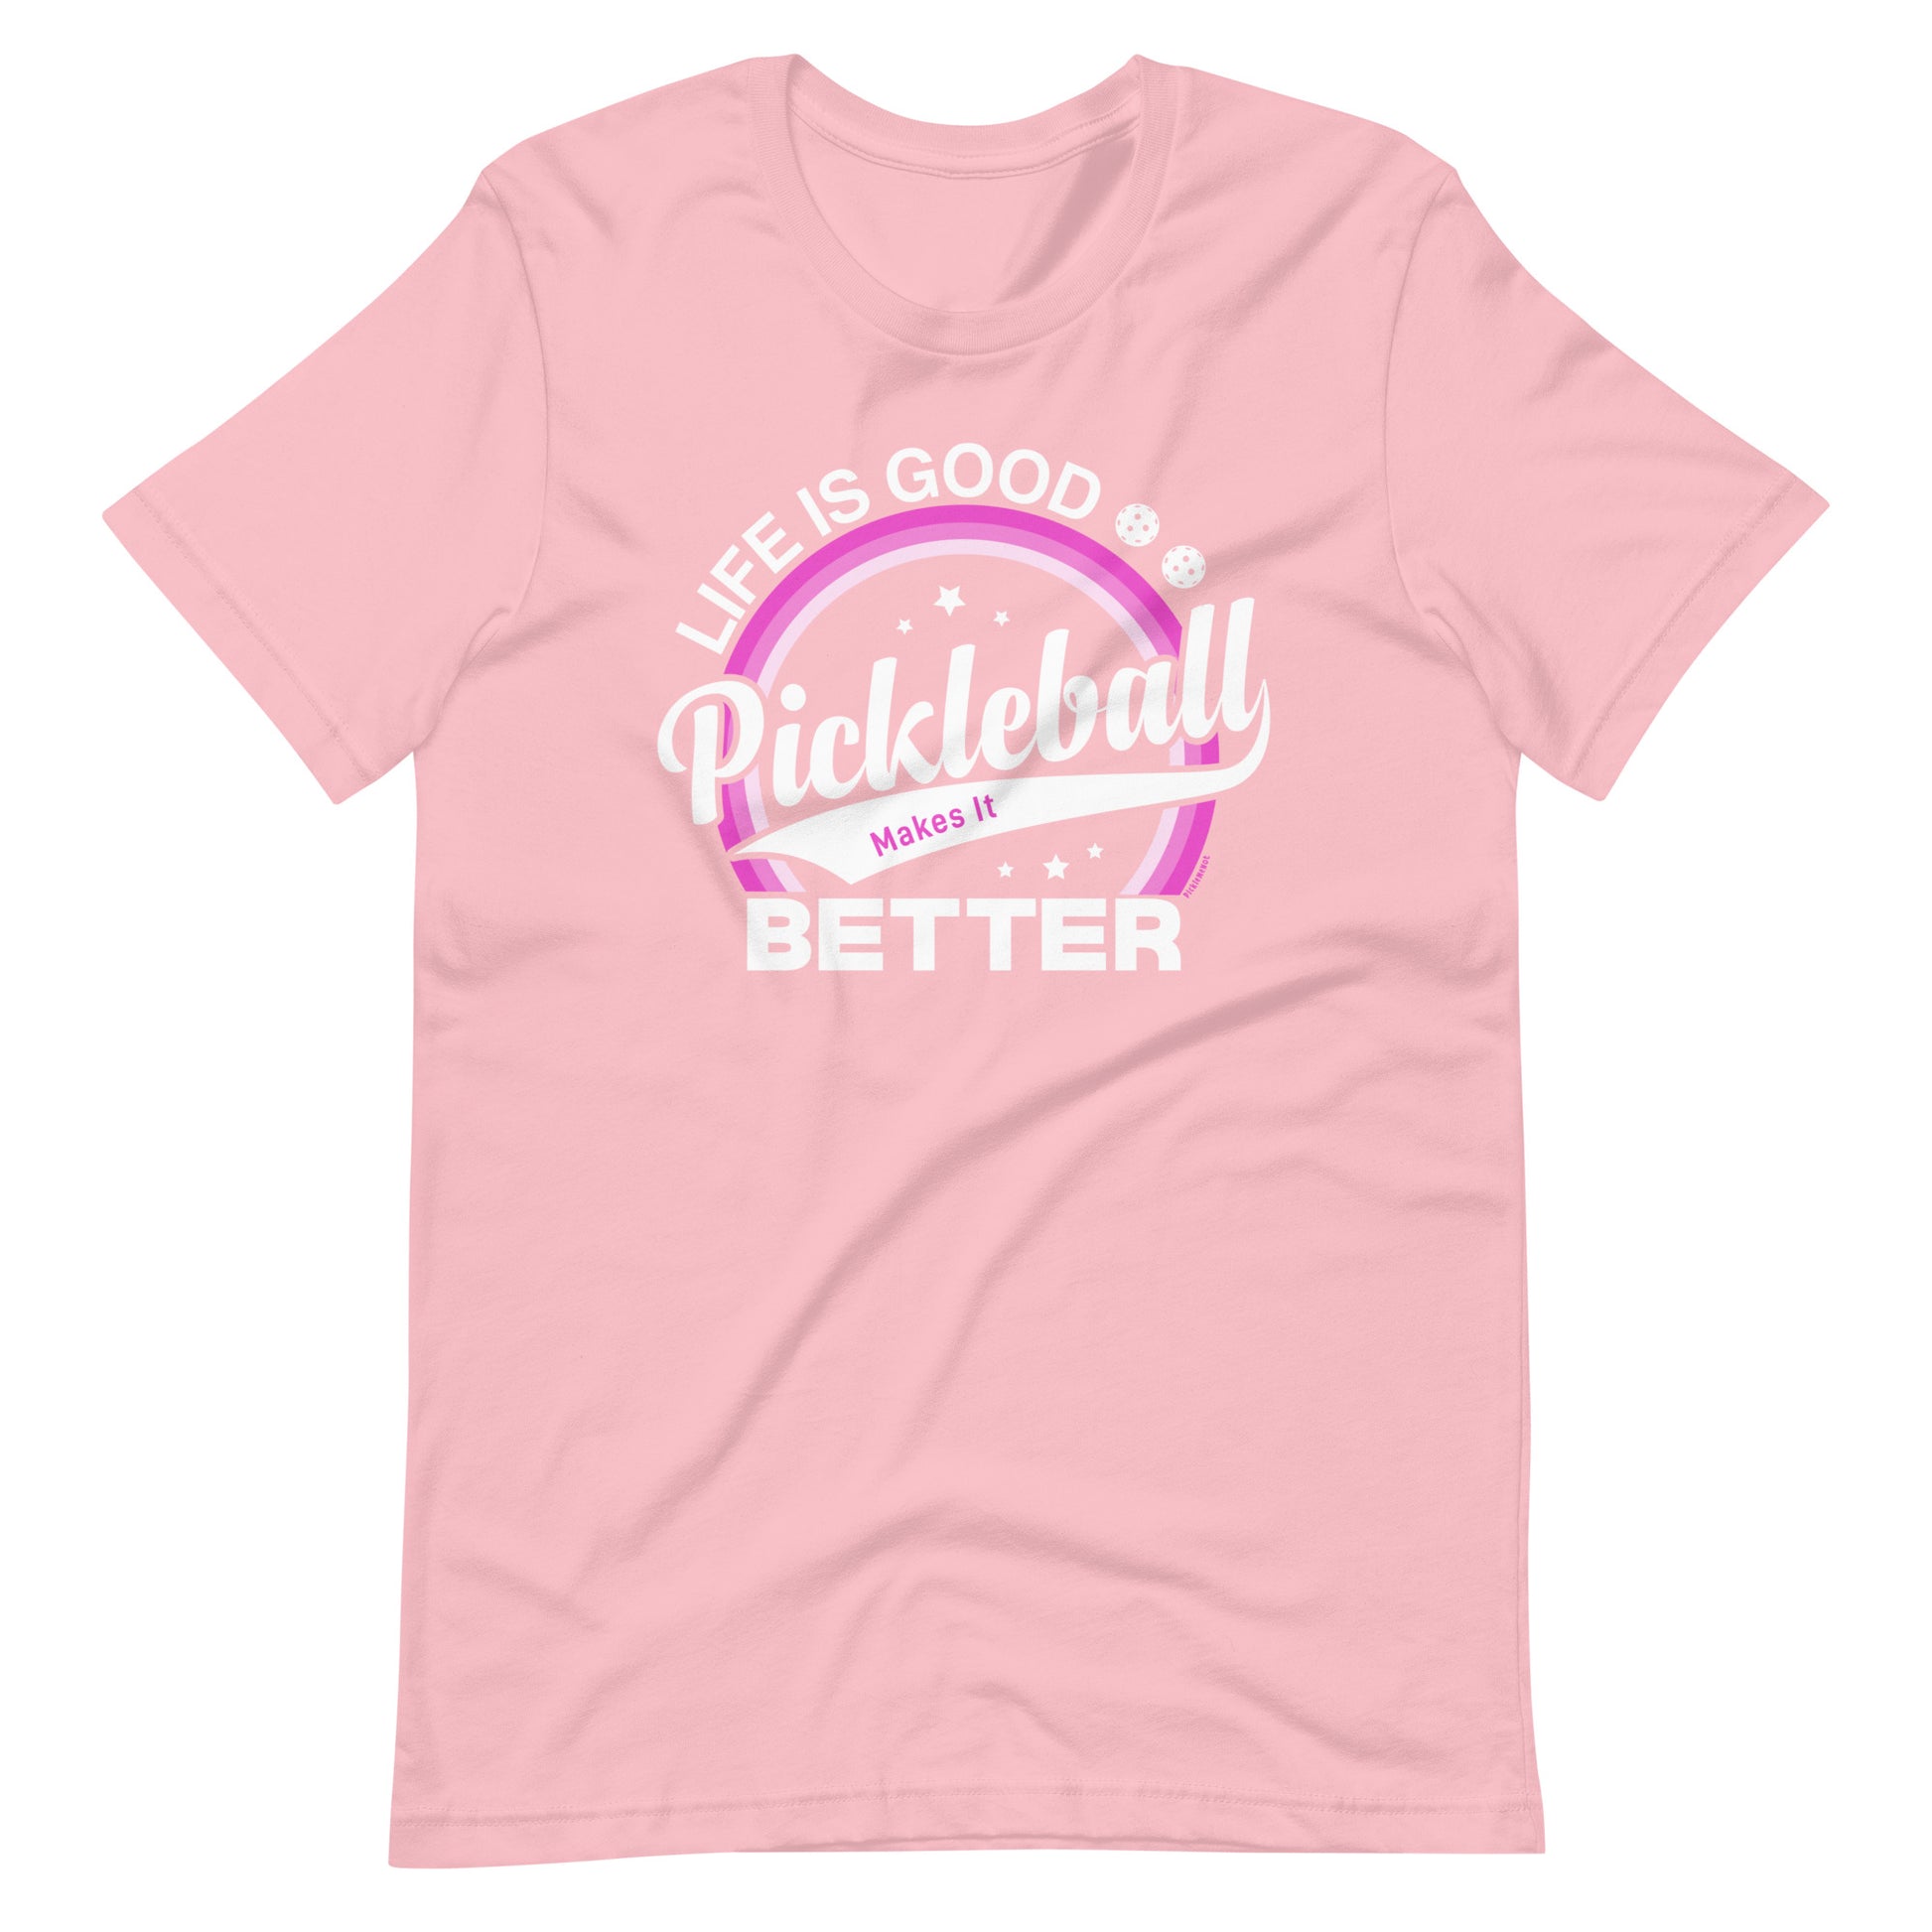 Fun Pickleball Graphic: "Life Is Good, Pickleball Makes It Better, Womens Unisex Pink T-Shirt